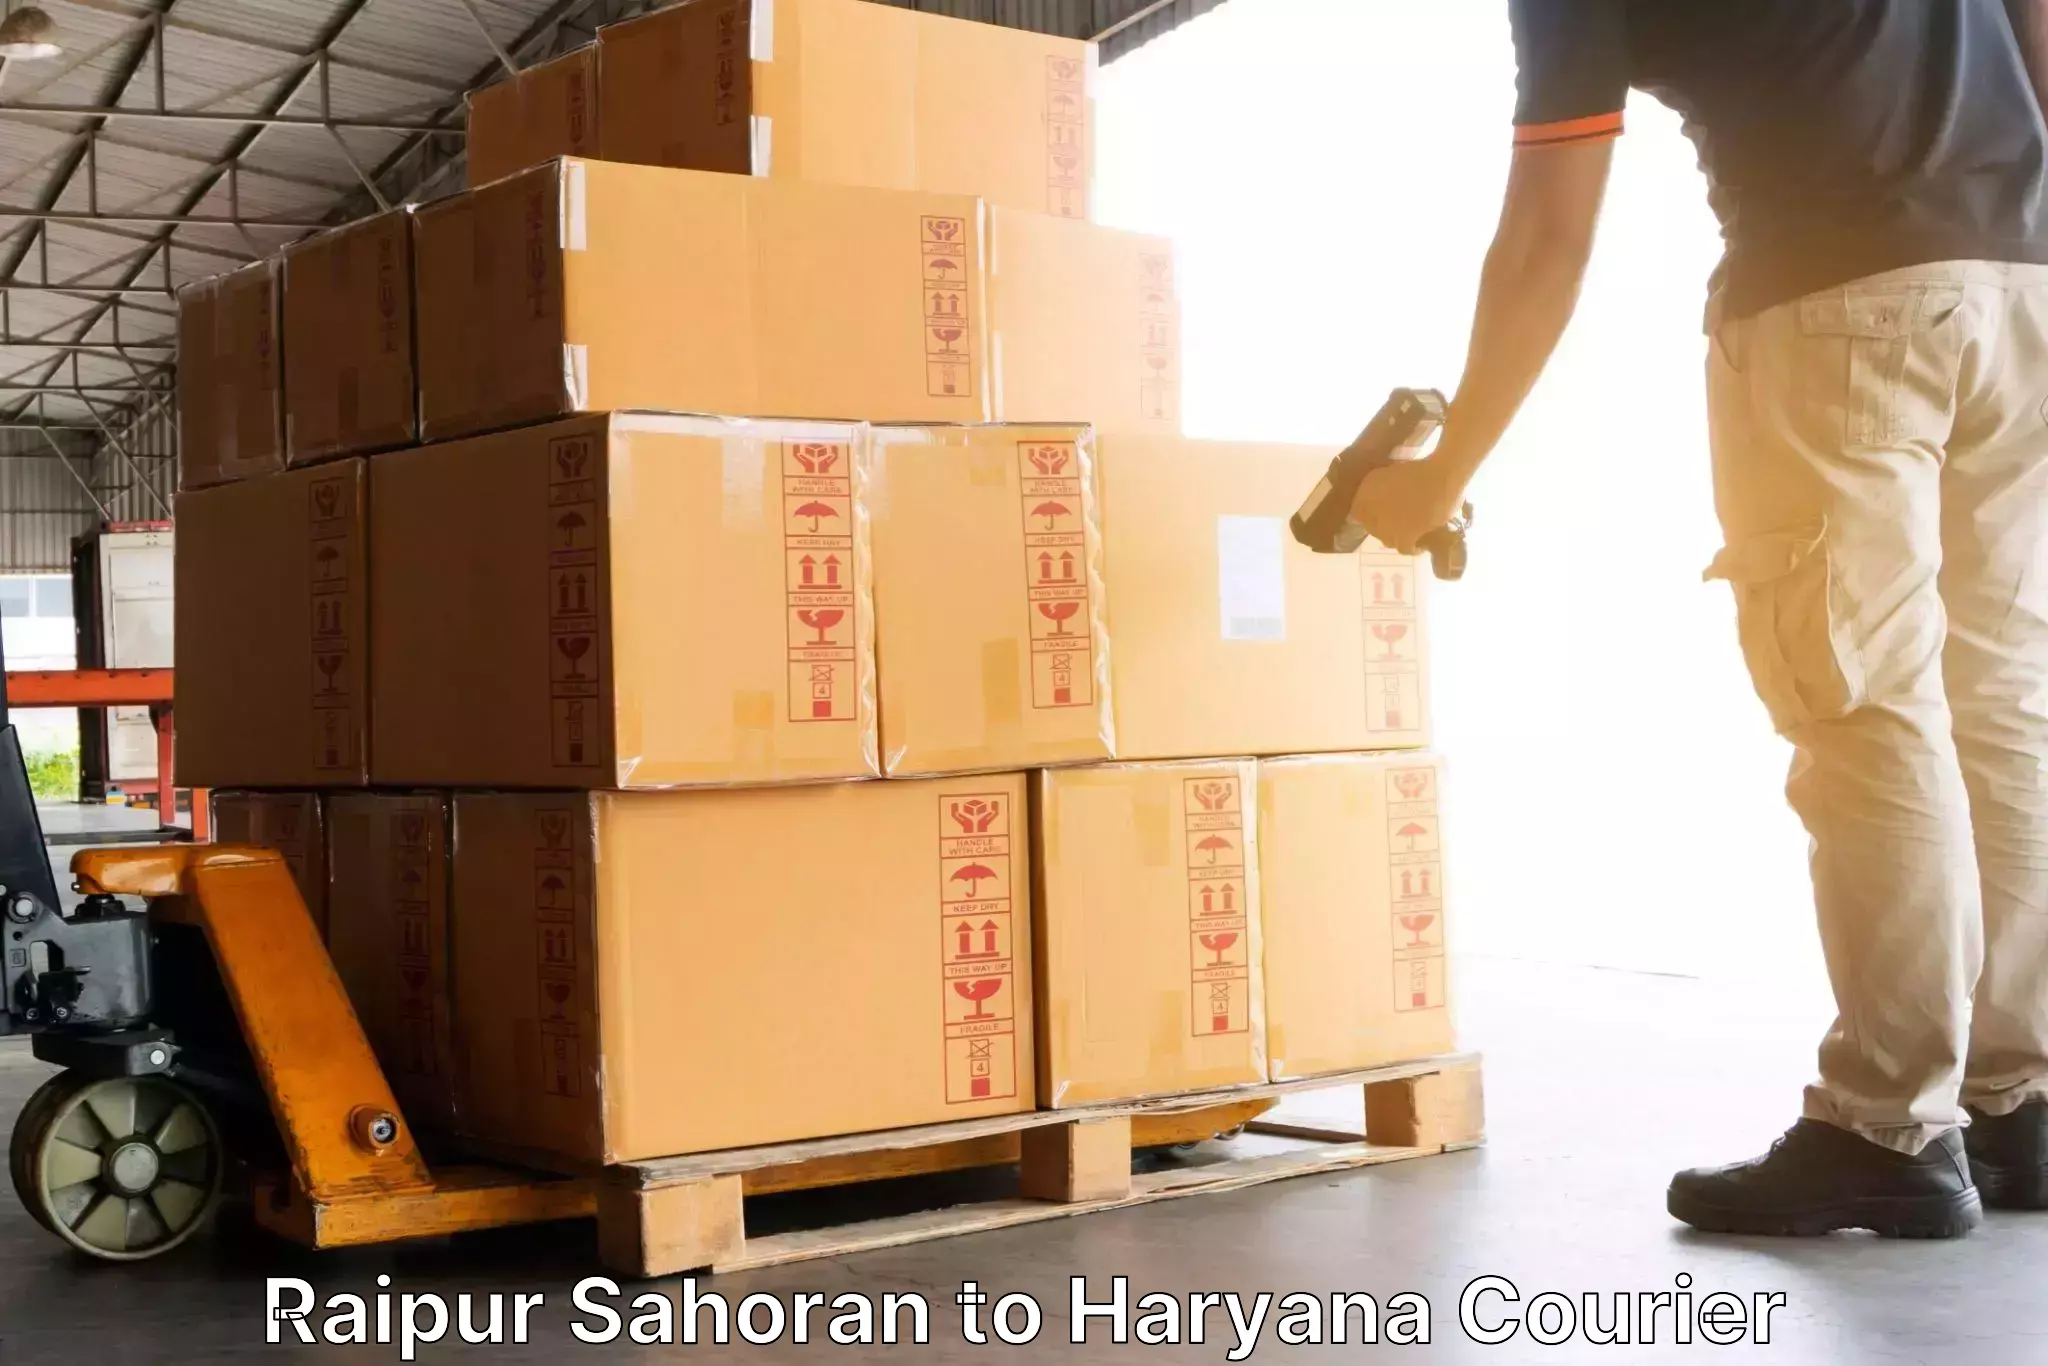 Courier service innovation in Raipur Sahoran to Loharu